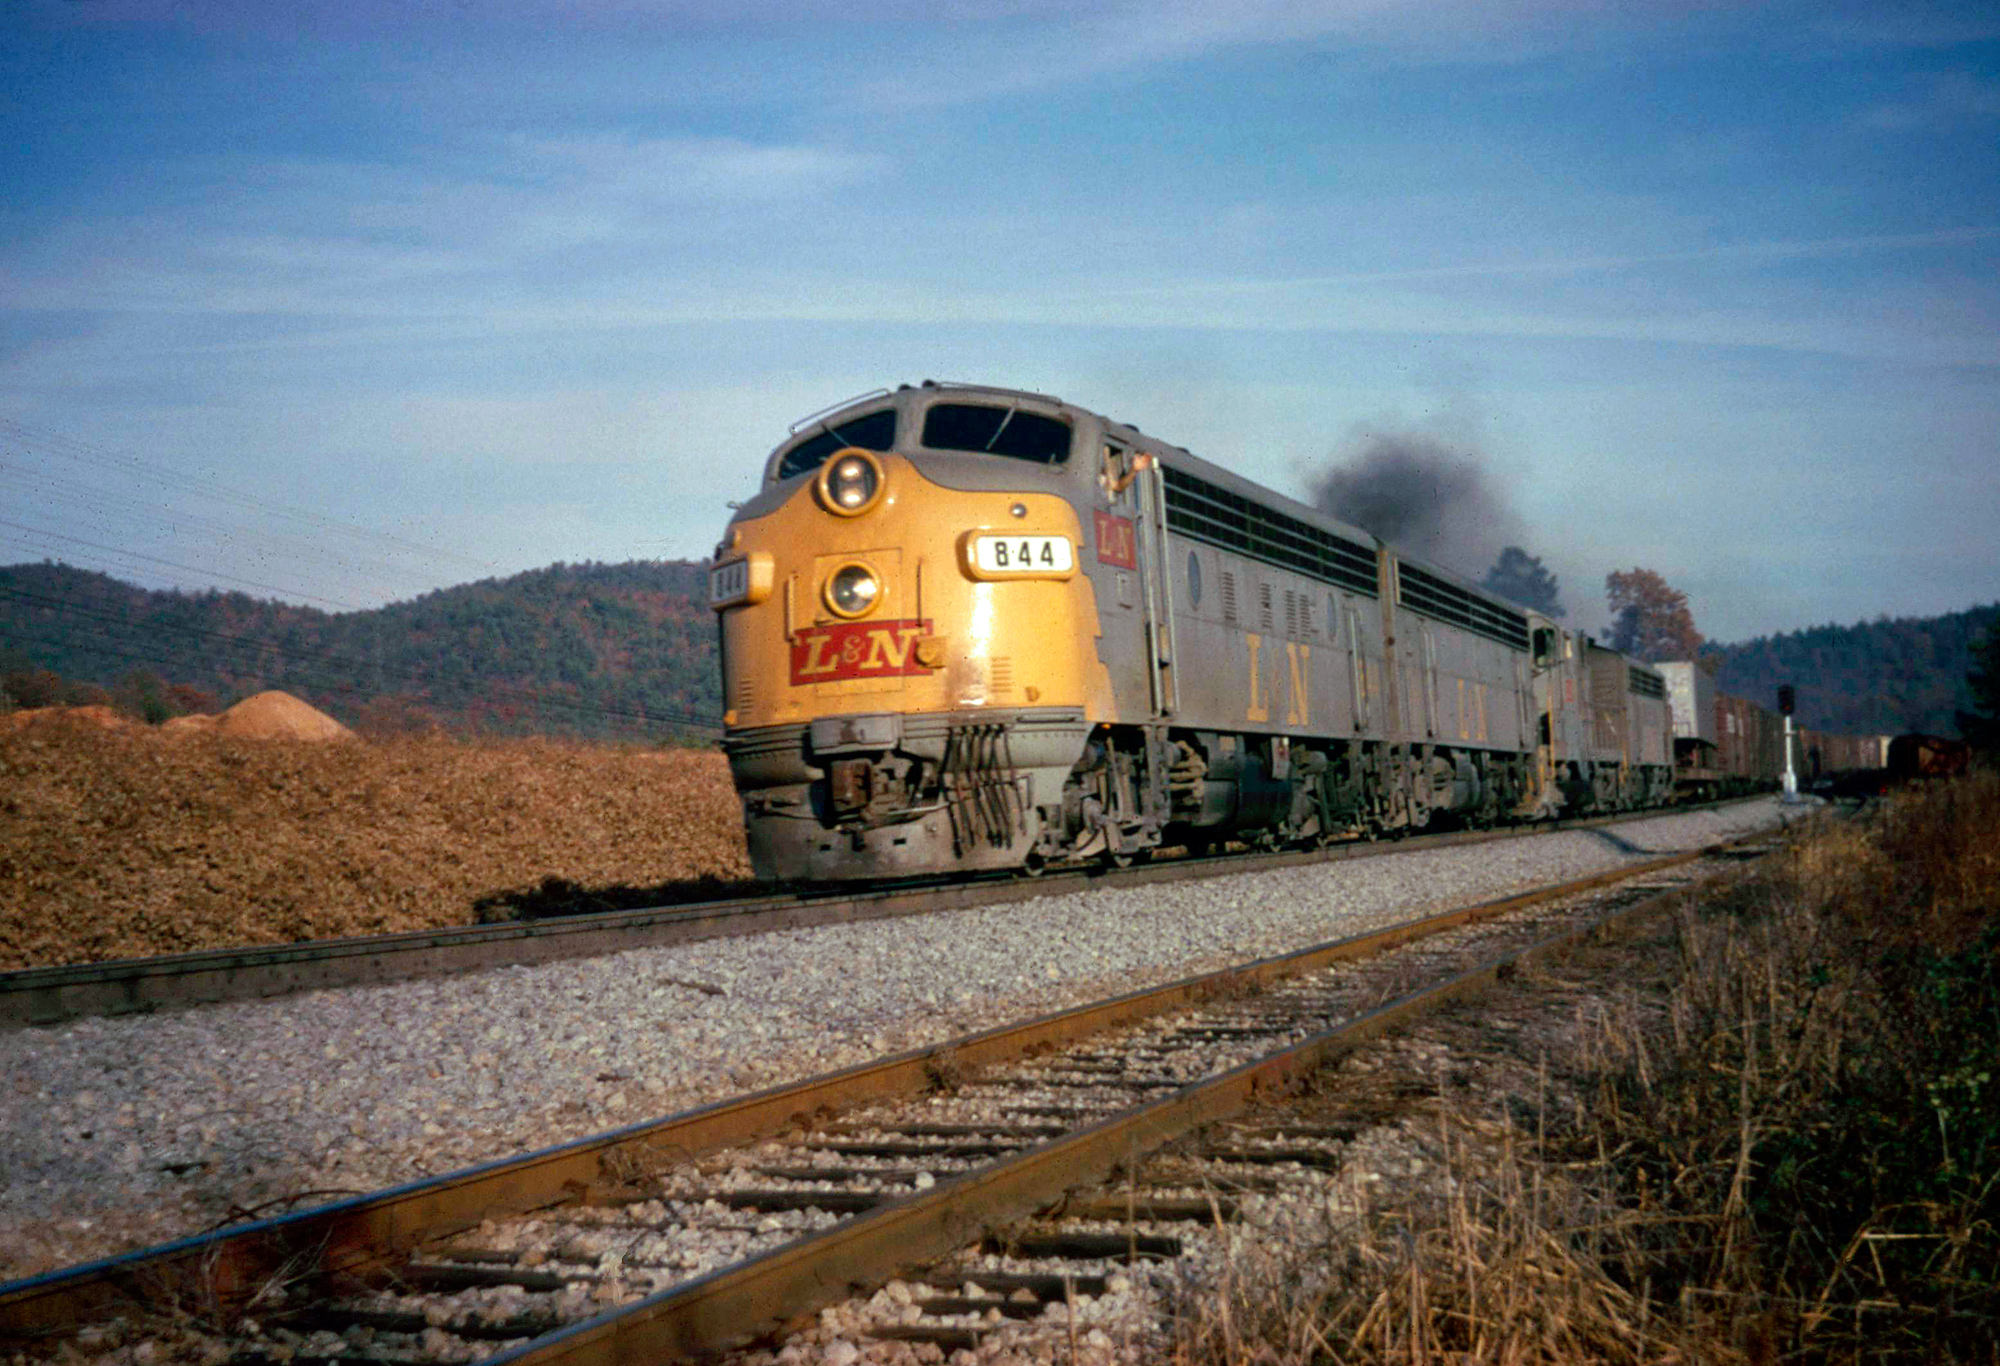 1980 LOUISVILLE & NASHVILLE DIESEL Freight Train PHOTO 166-s 